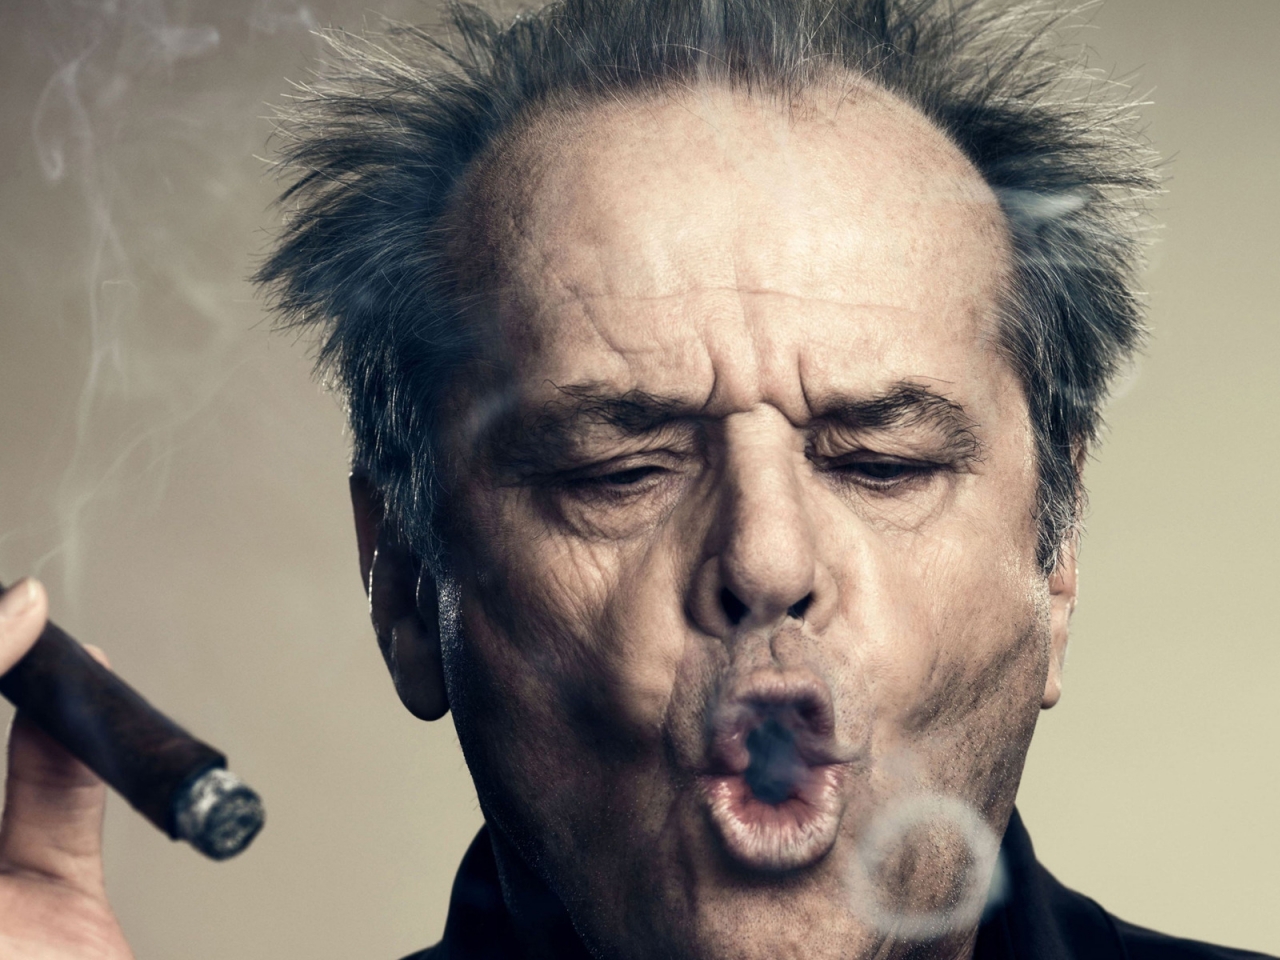 Jack Nicholson for 1280 x 960 resolution